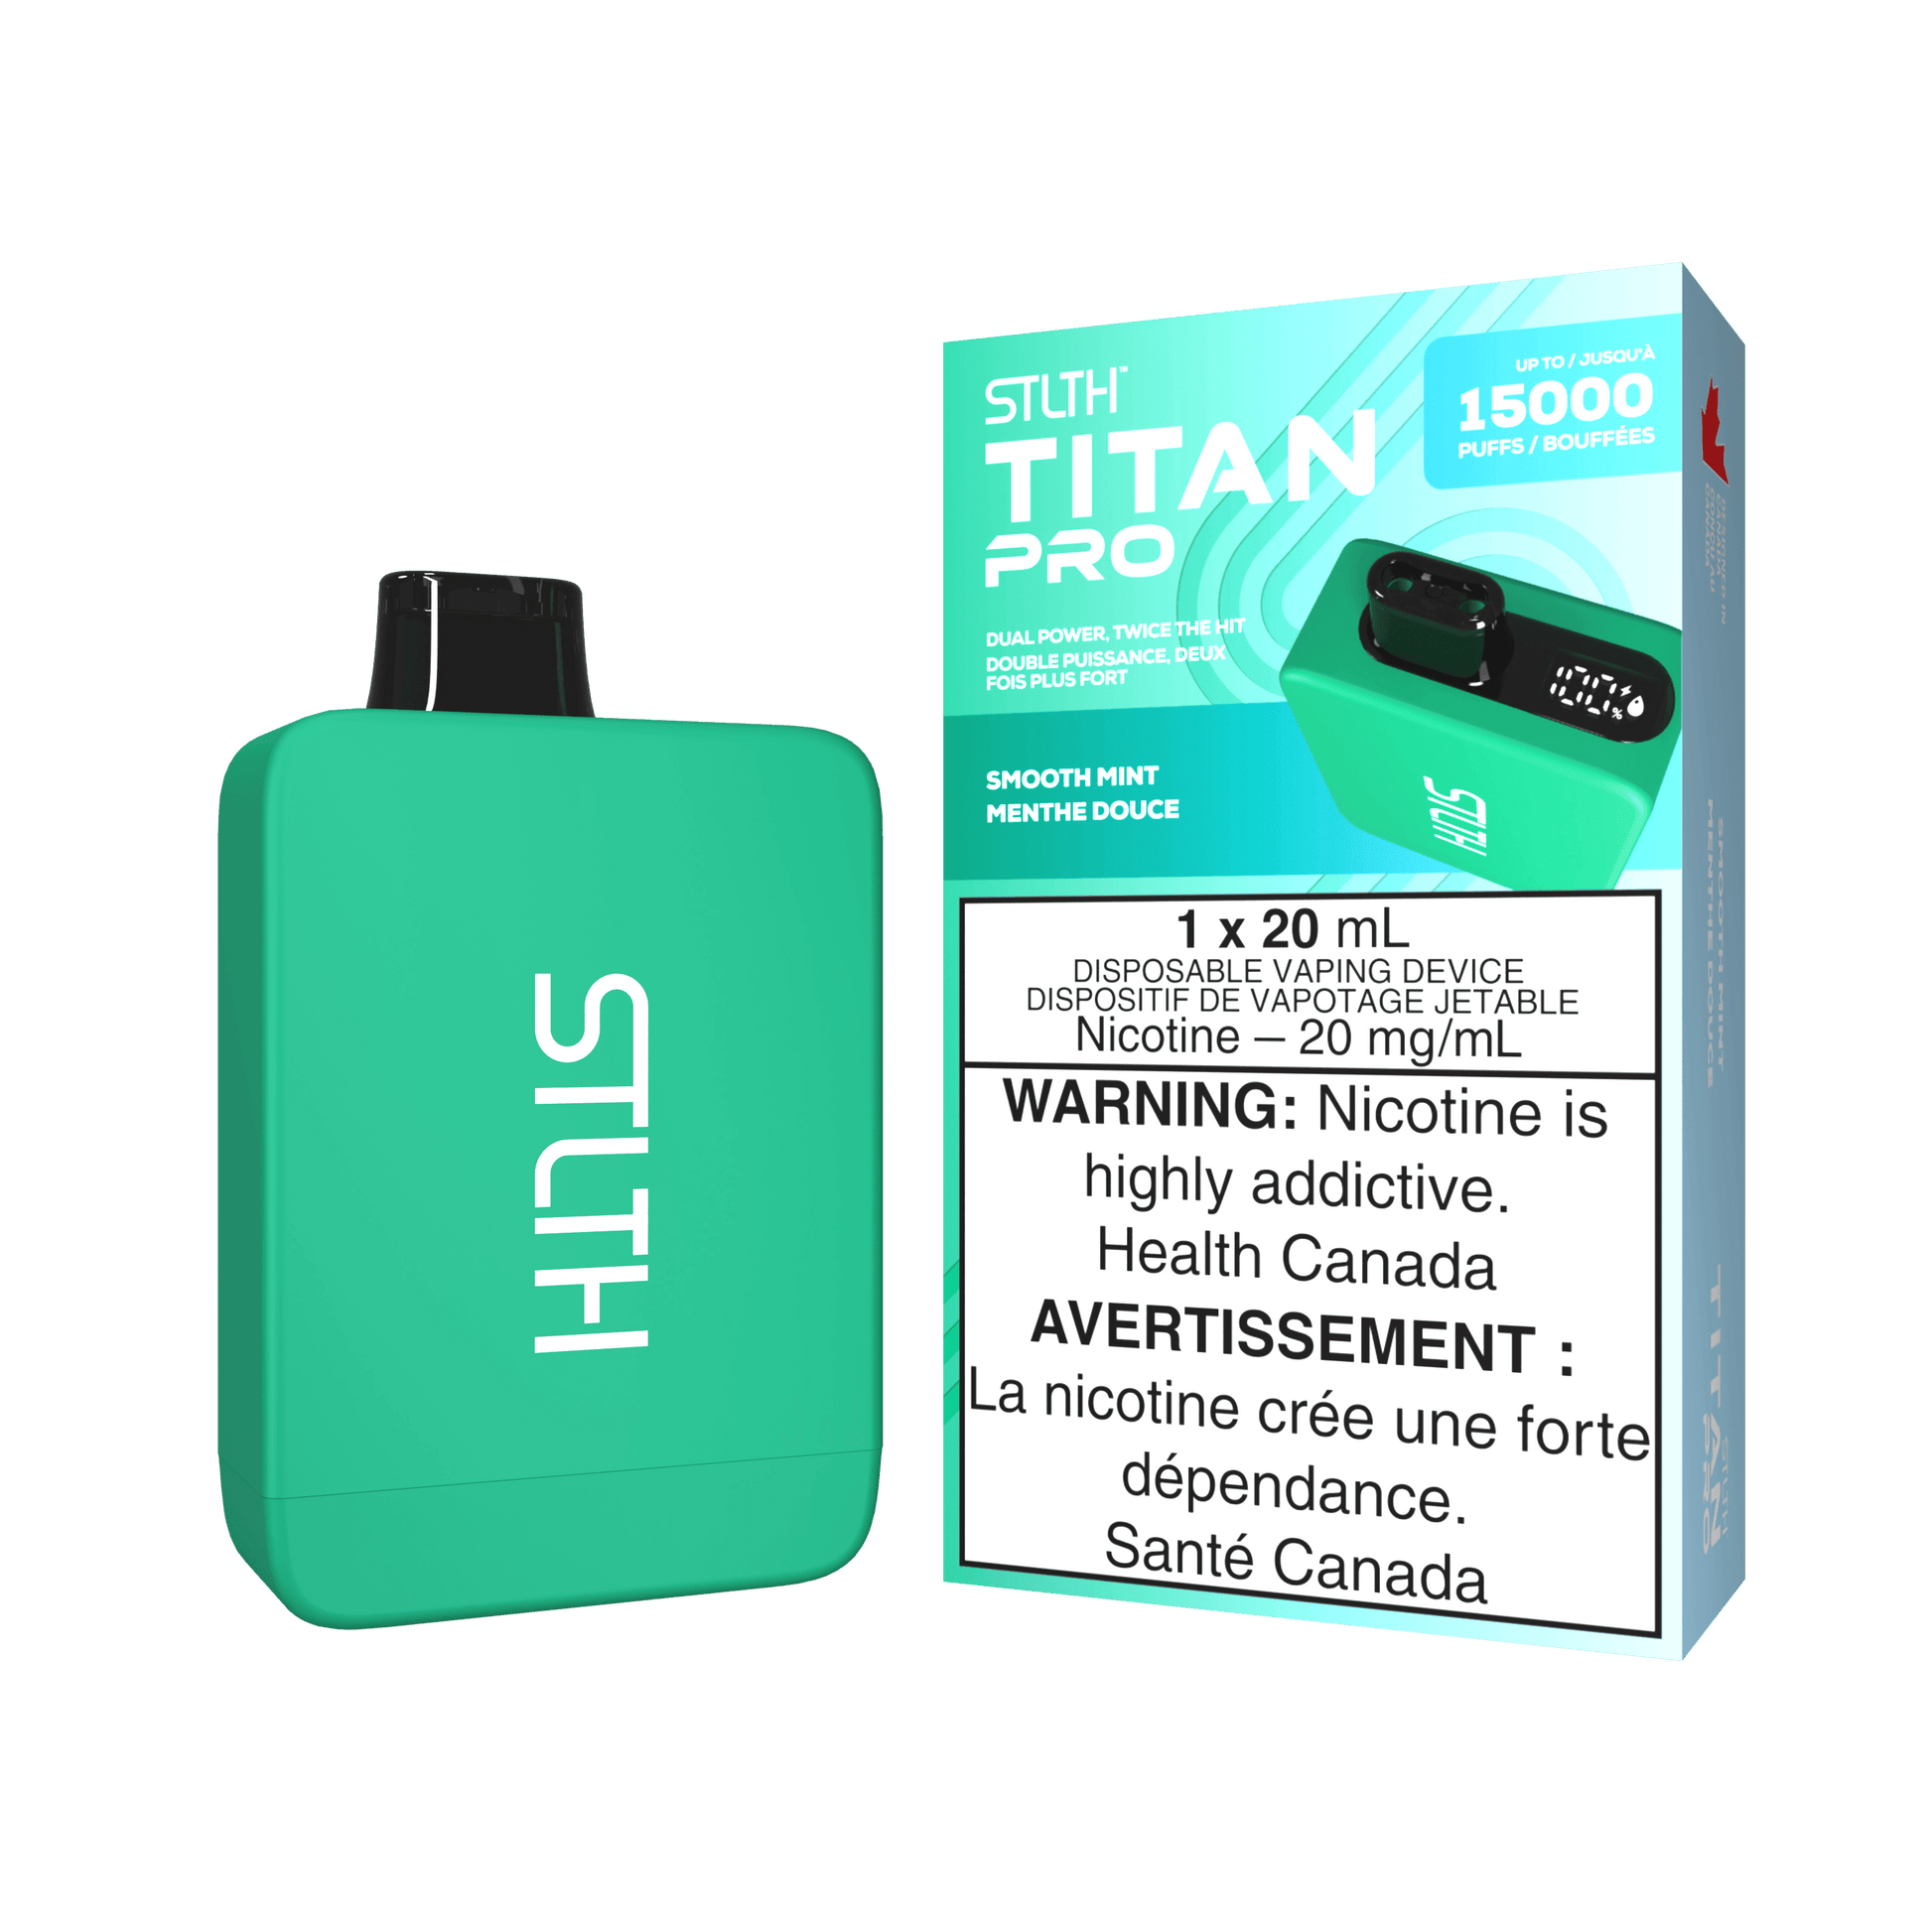 STLTH Titan Pro - Smooth Mint - Vapor Shoppe